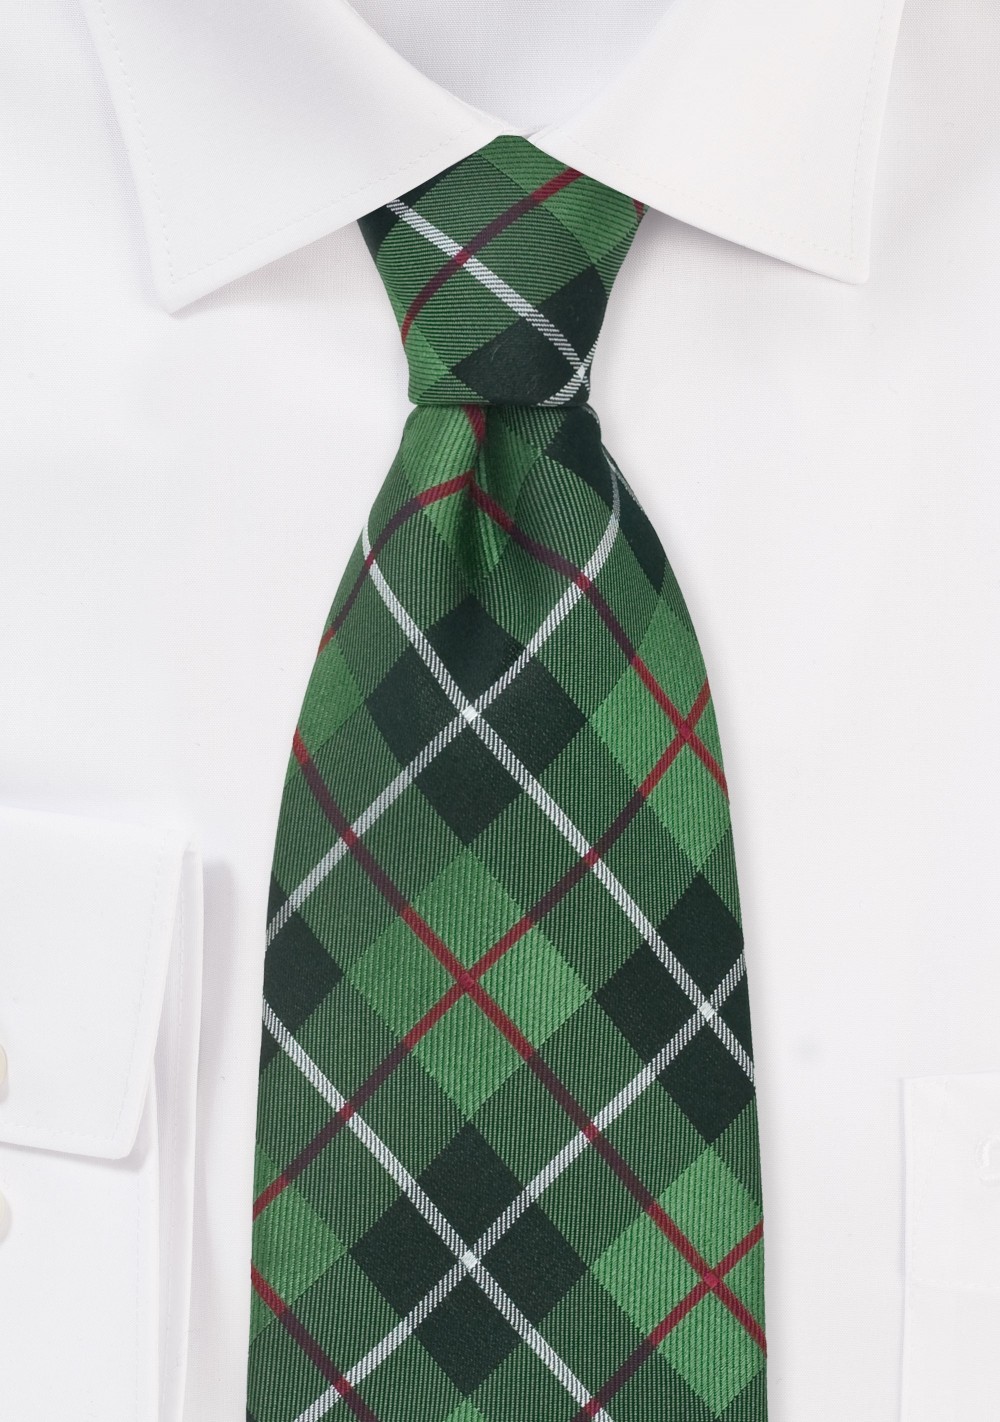 XL Tie in Tartan Check Green Black